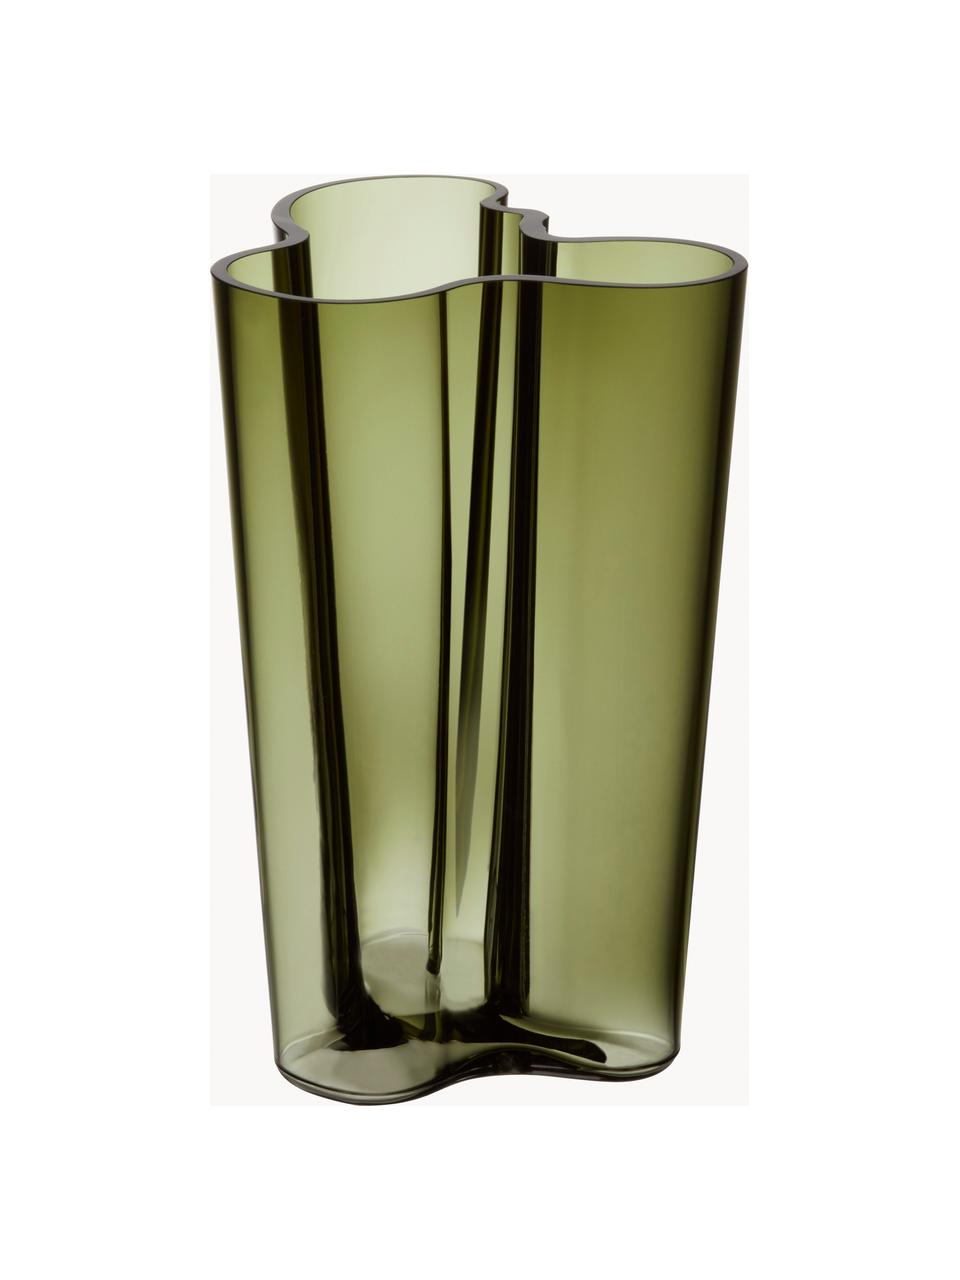 Foukaná váza Alvar Aalto, V 25 cm, Foukané sklo, Zelená, transparentní, Š 17 cm, V 25 cm